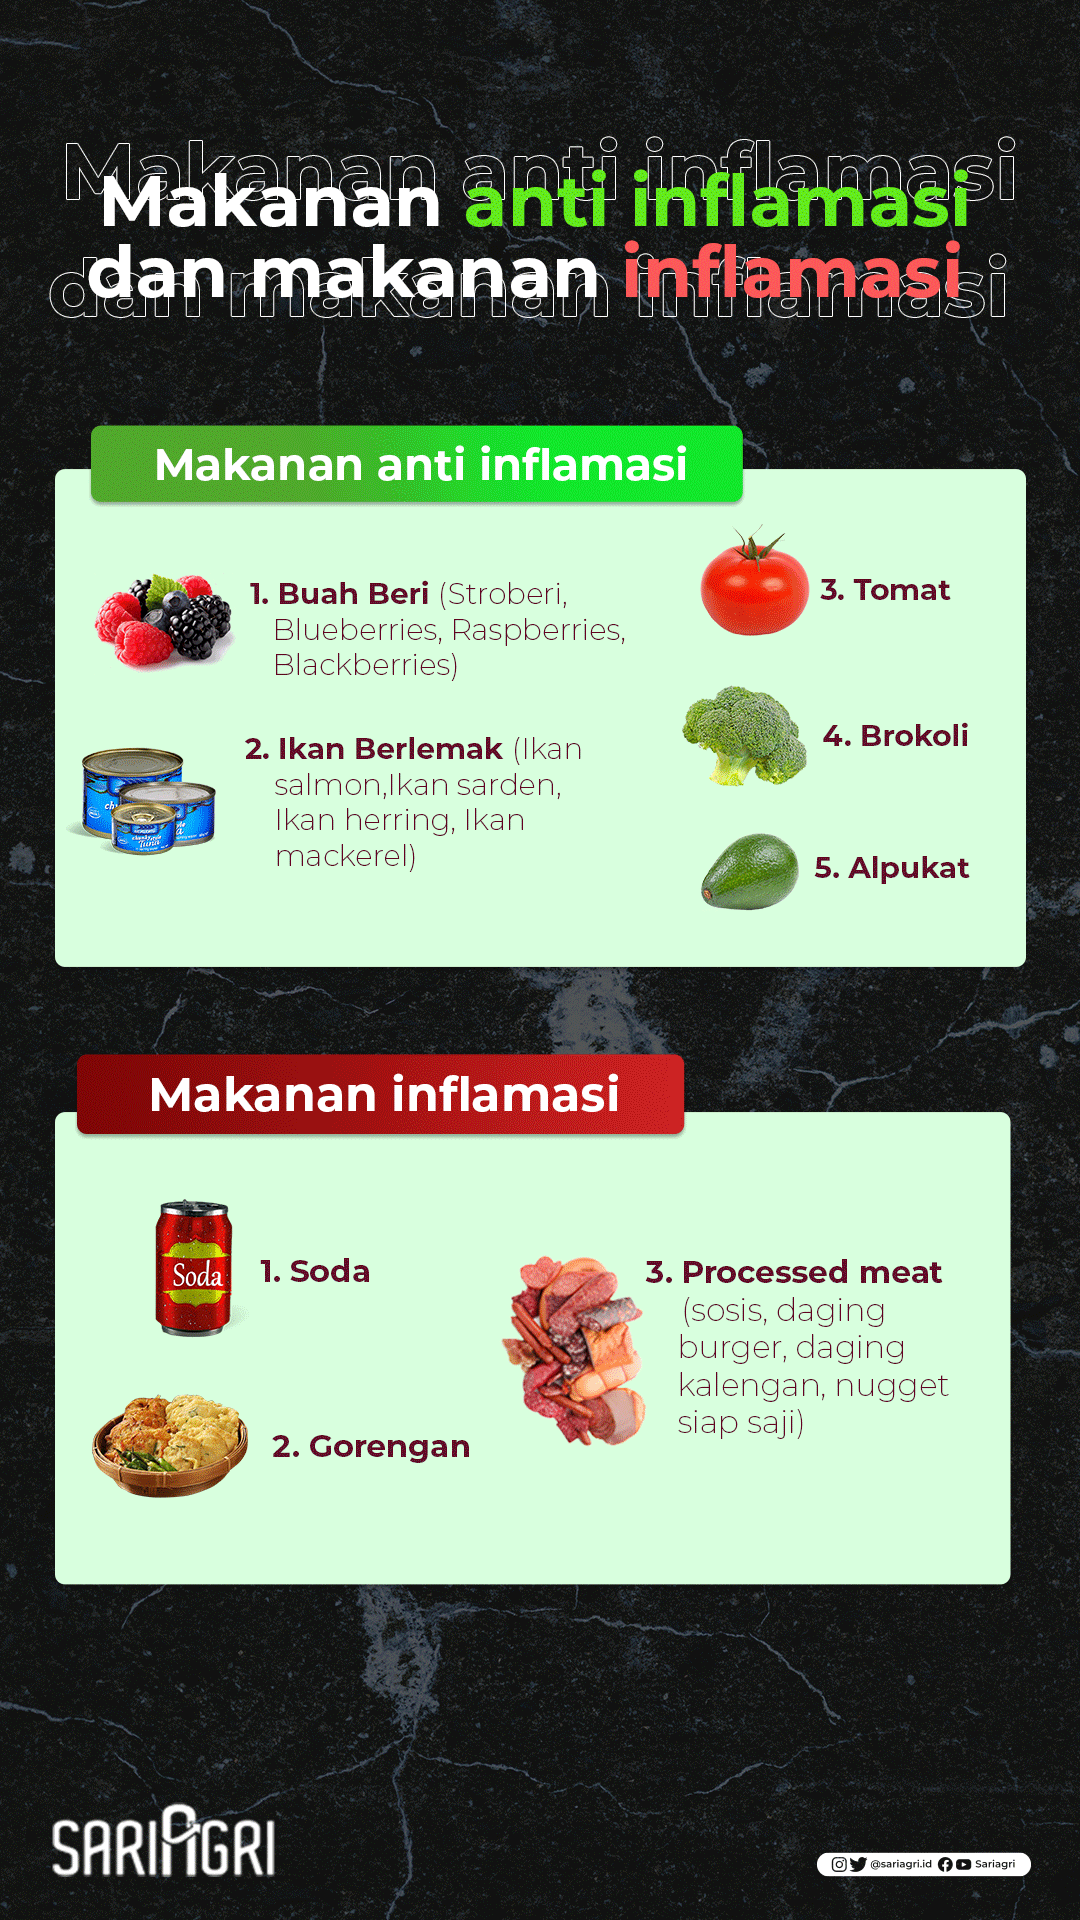 Jenis-jenis Makanan Anti Inflamasi dan Makanan Inflamasi. (Sariagri/Faisal)